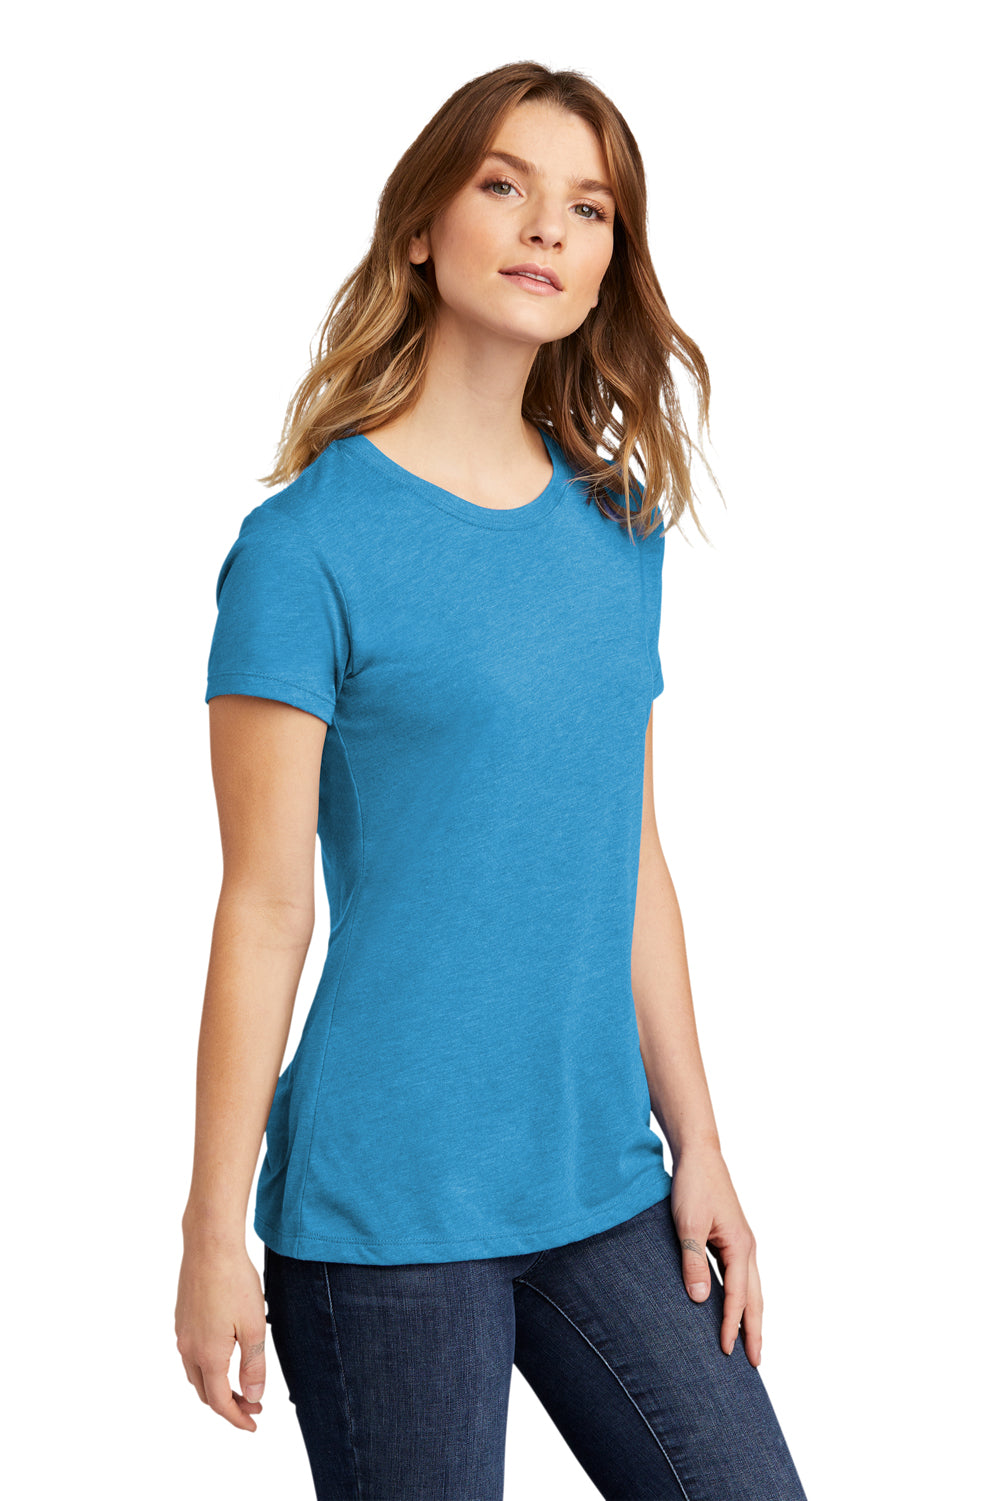 Next Level NL6710/6710 Mens Jersey Short Sleeve Crewneck T-Shirt Vintage Turquoise Blue 3Q